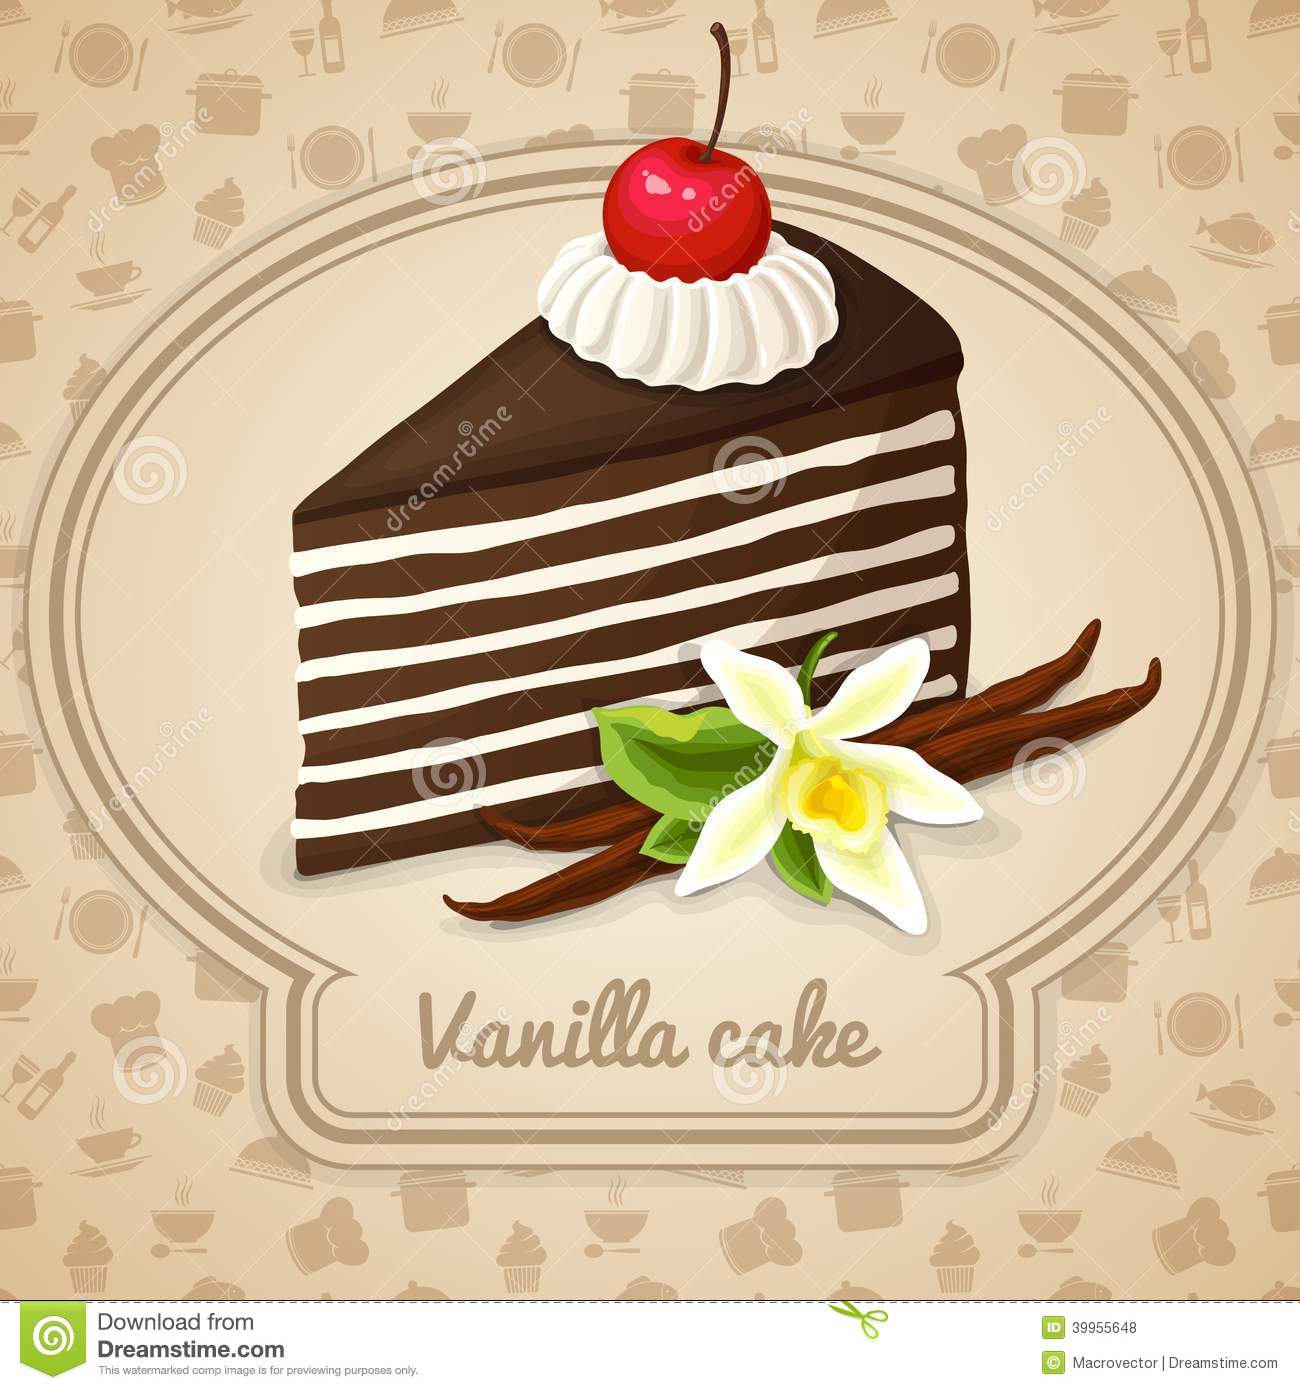 Pin Illustration Chocolate Cake Slice Cake On Pinterest